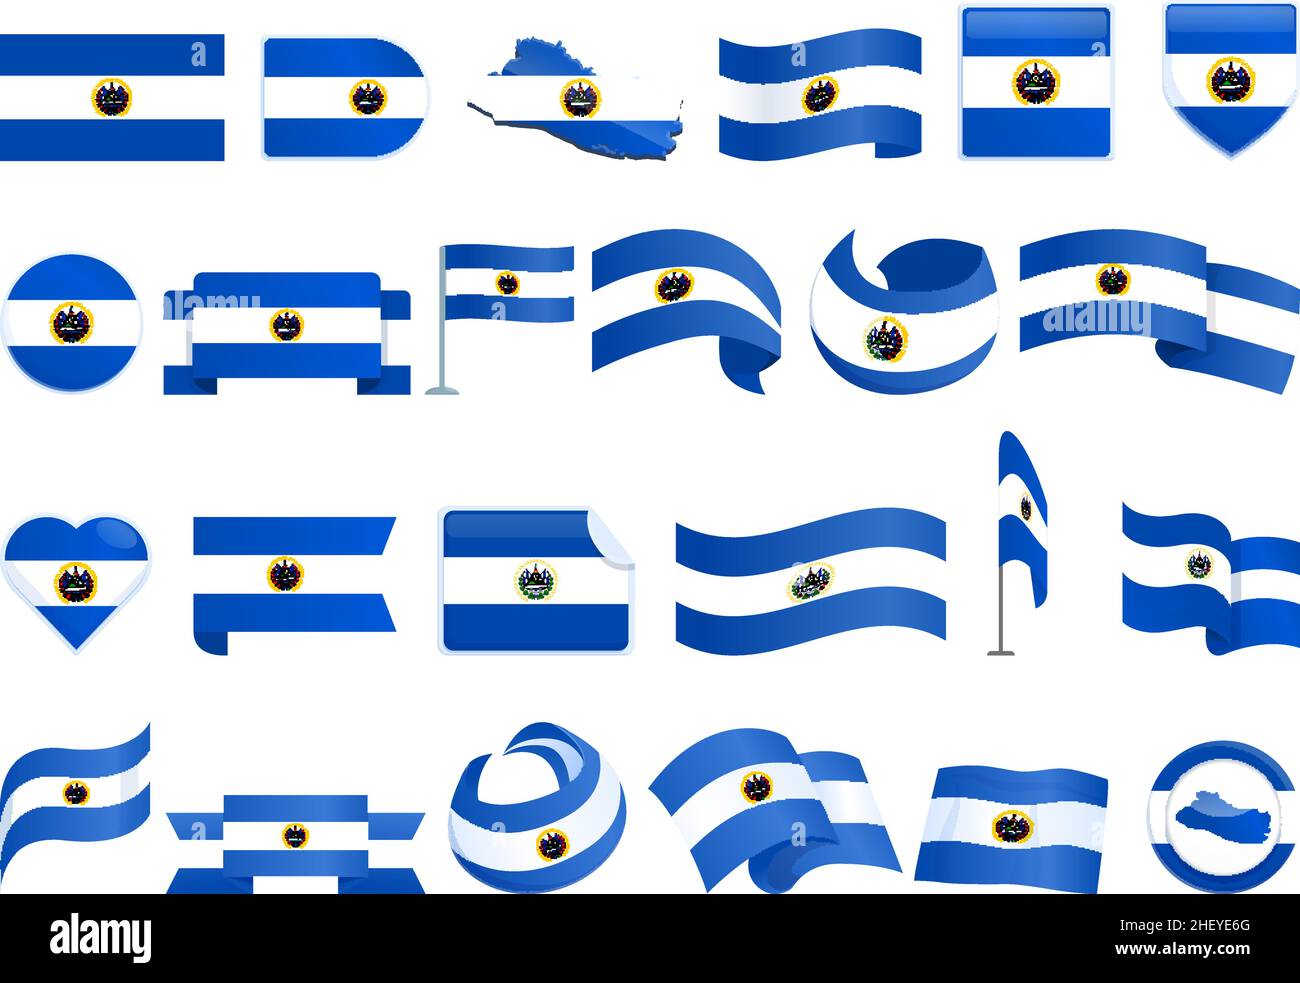 100,000 Bandera argentina Vector Images